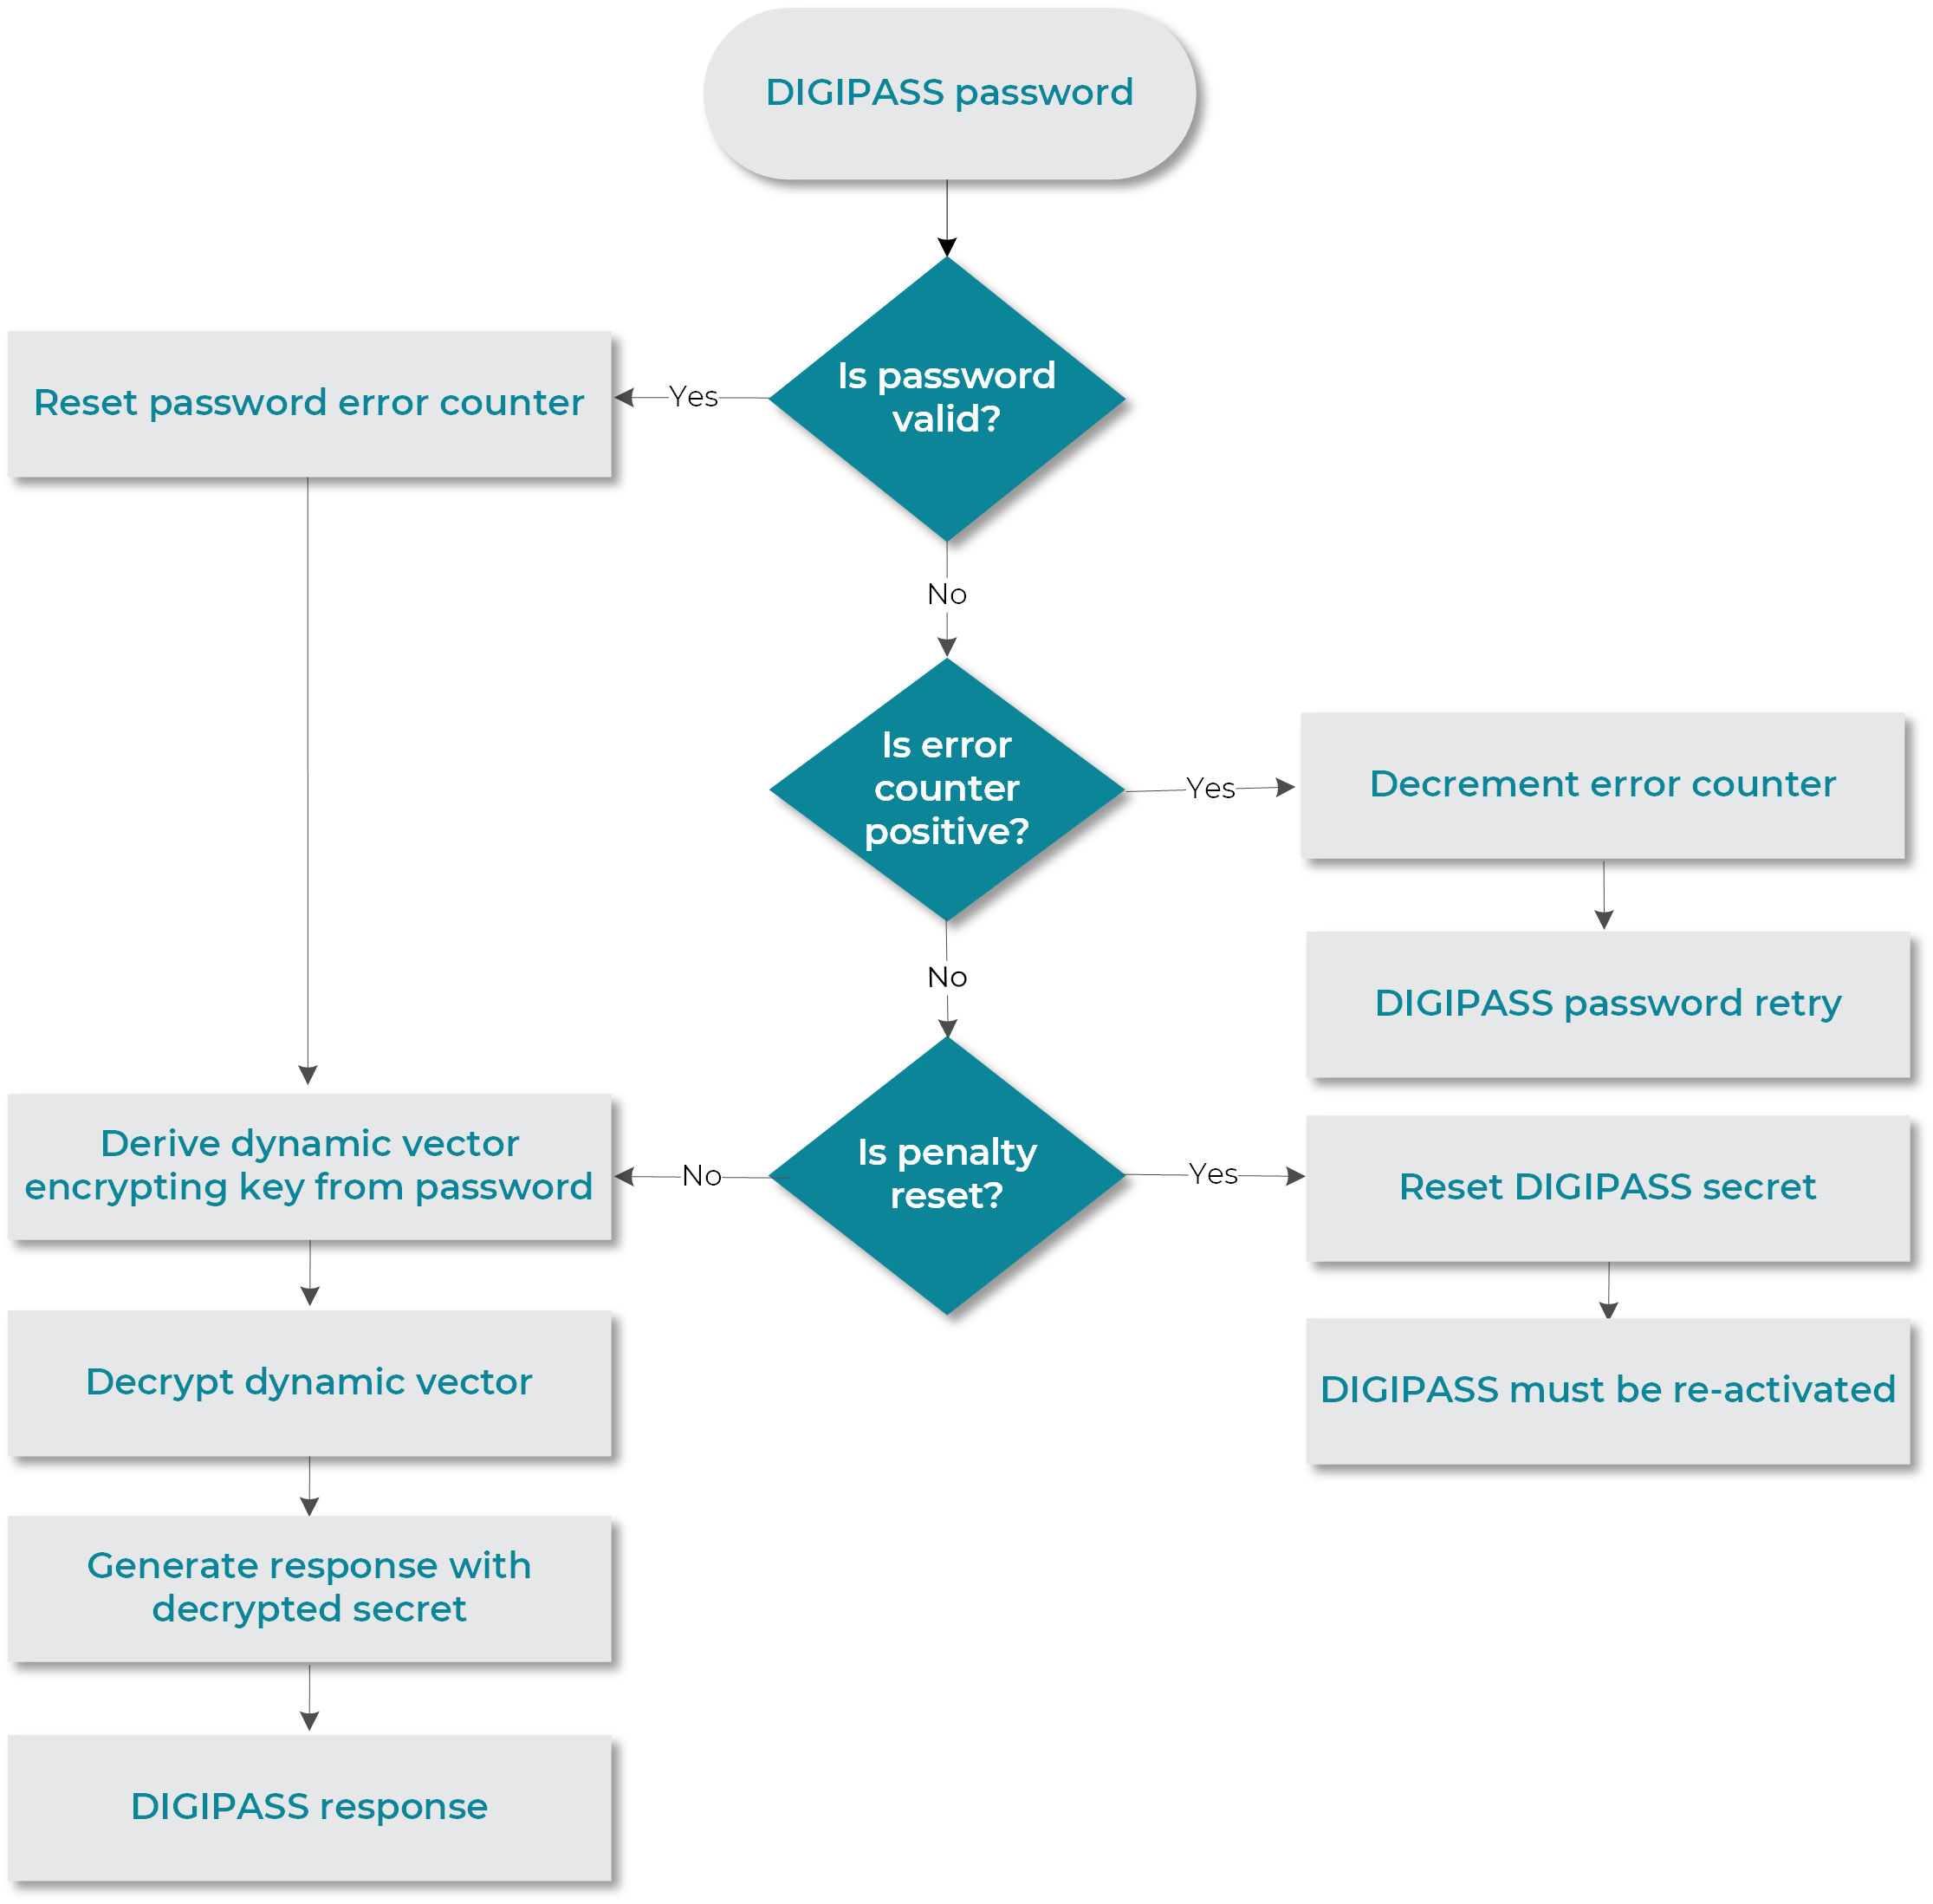 Password error management during response generation (overview)